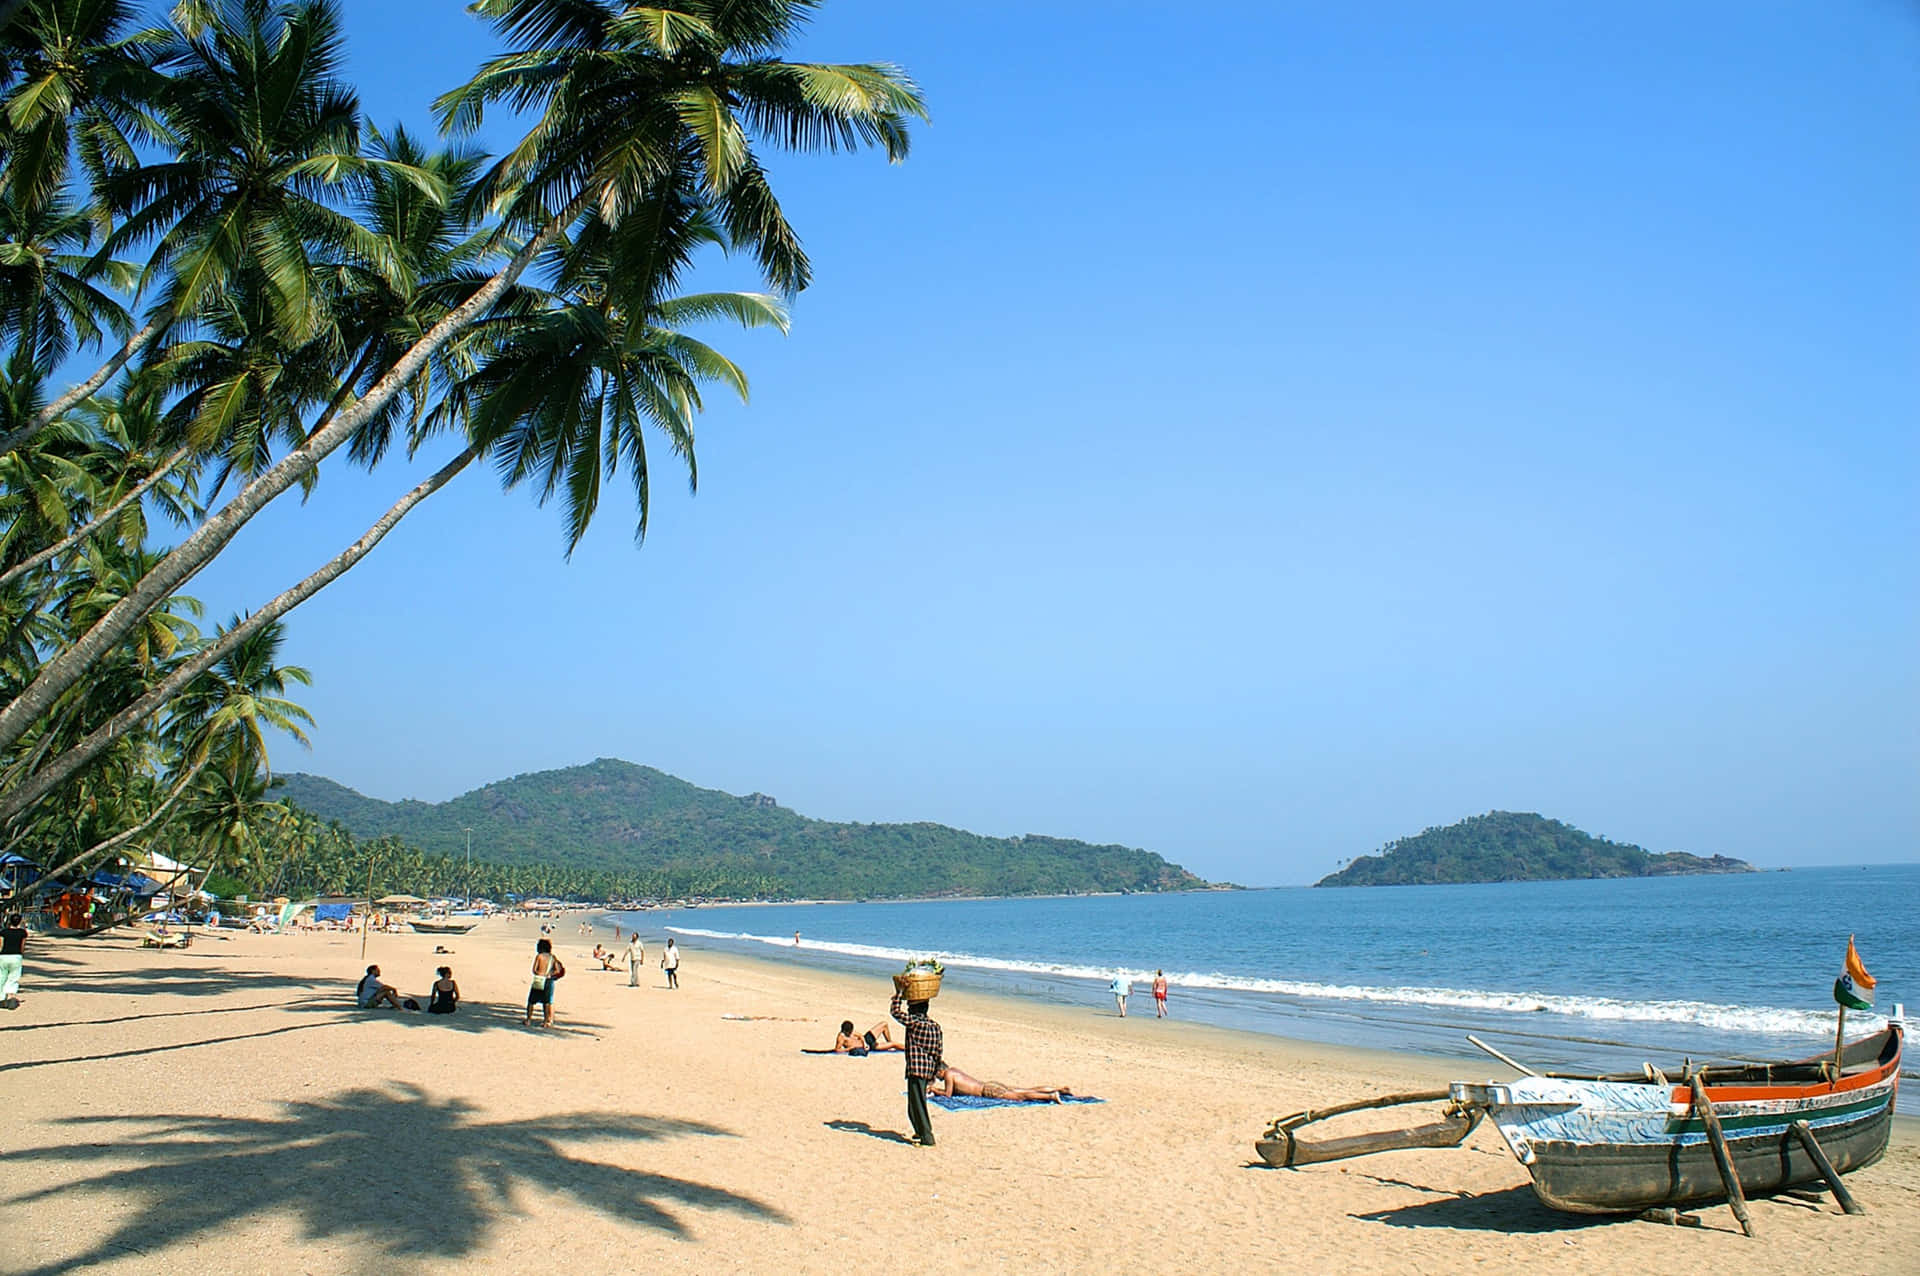 “Relaxing days at the beautiful Goa Beach”